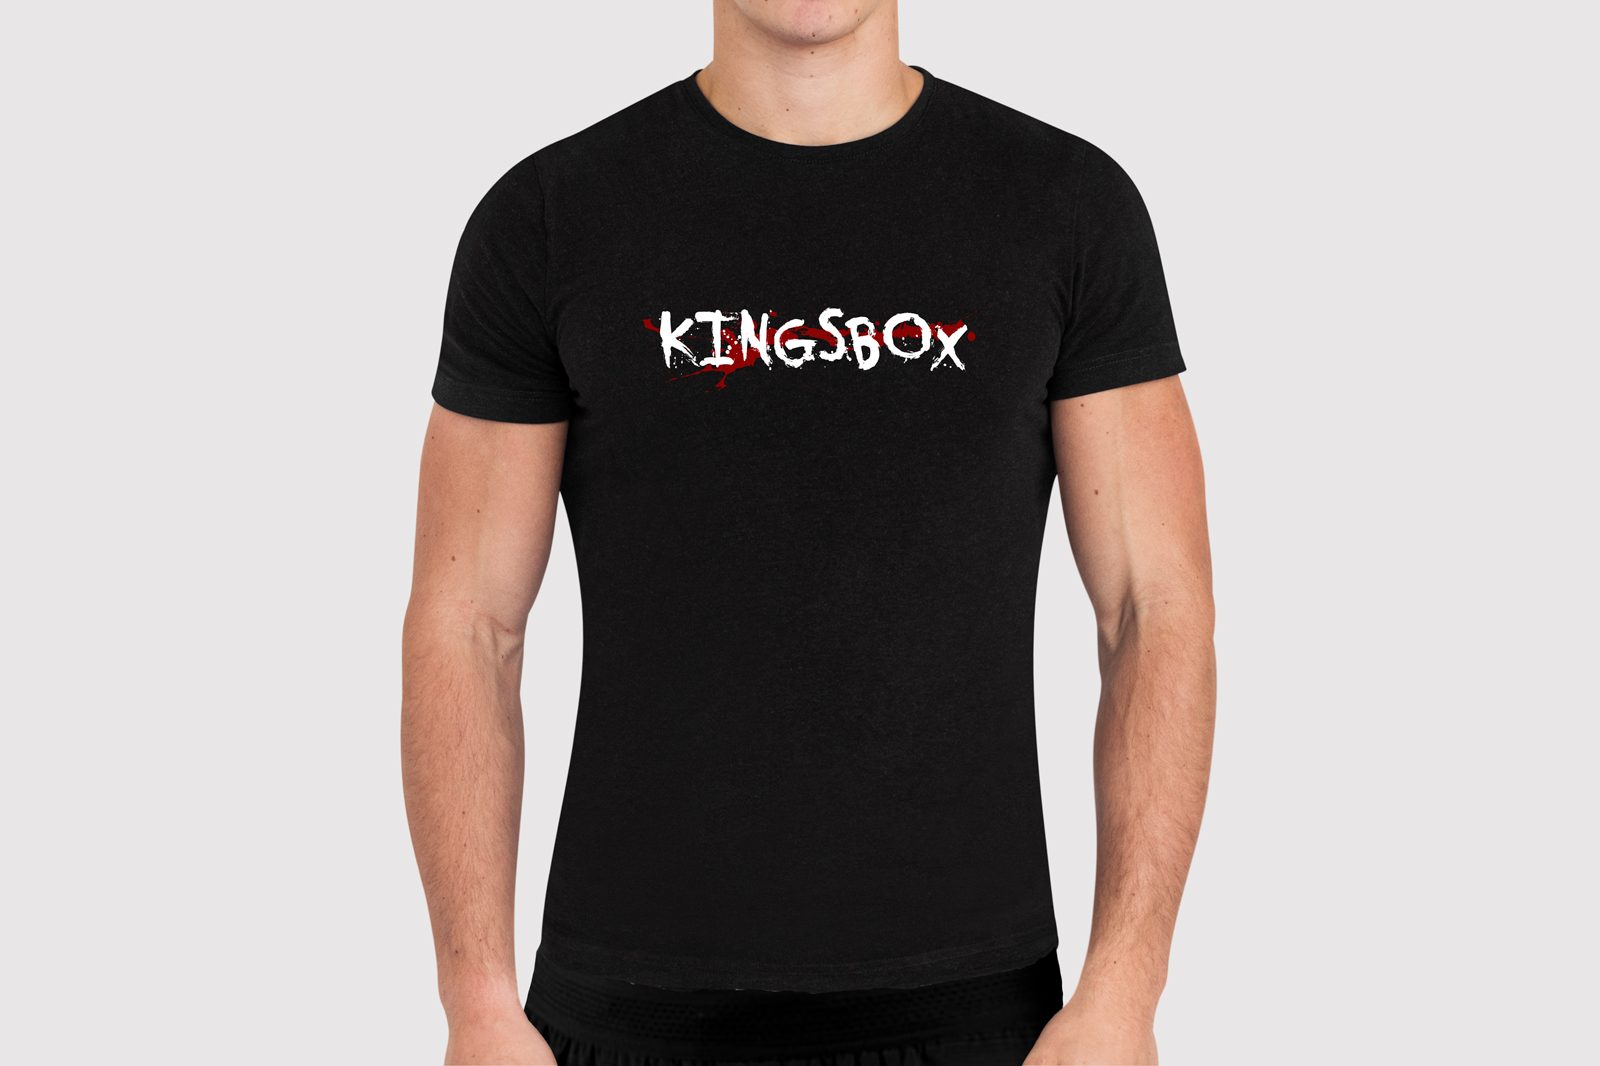 KingsBox Blood T-shirt